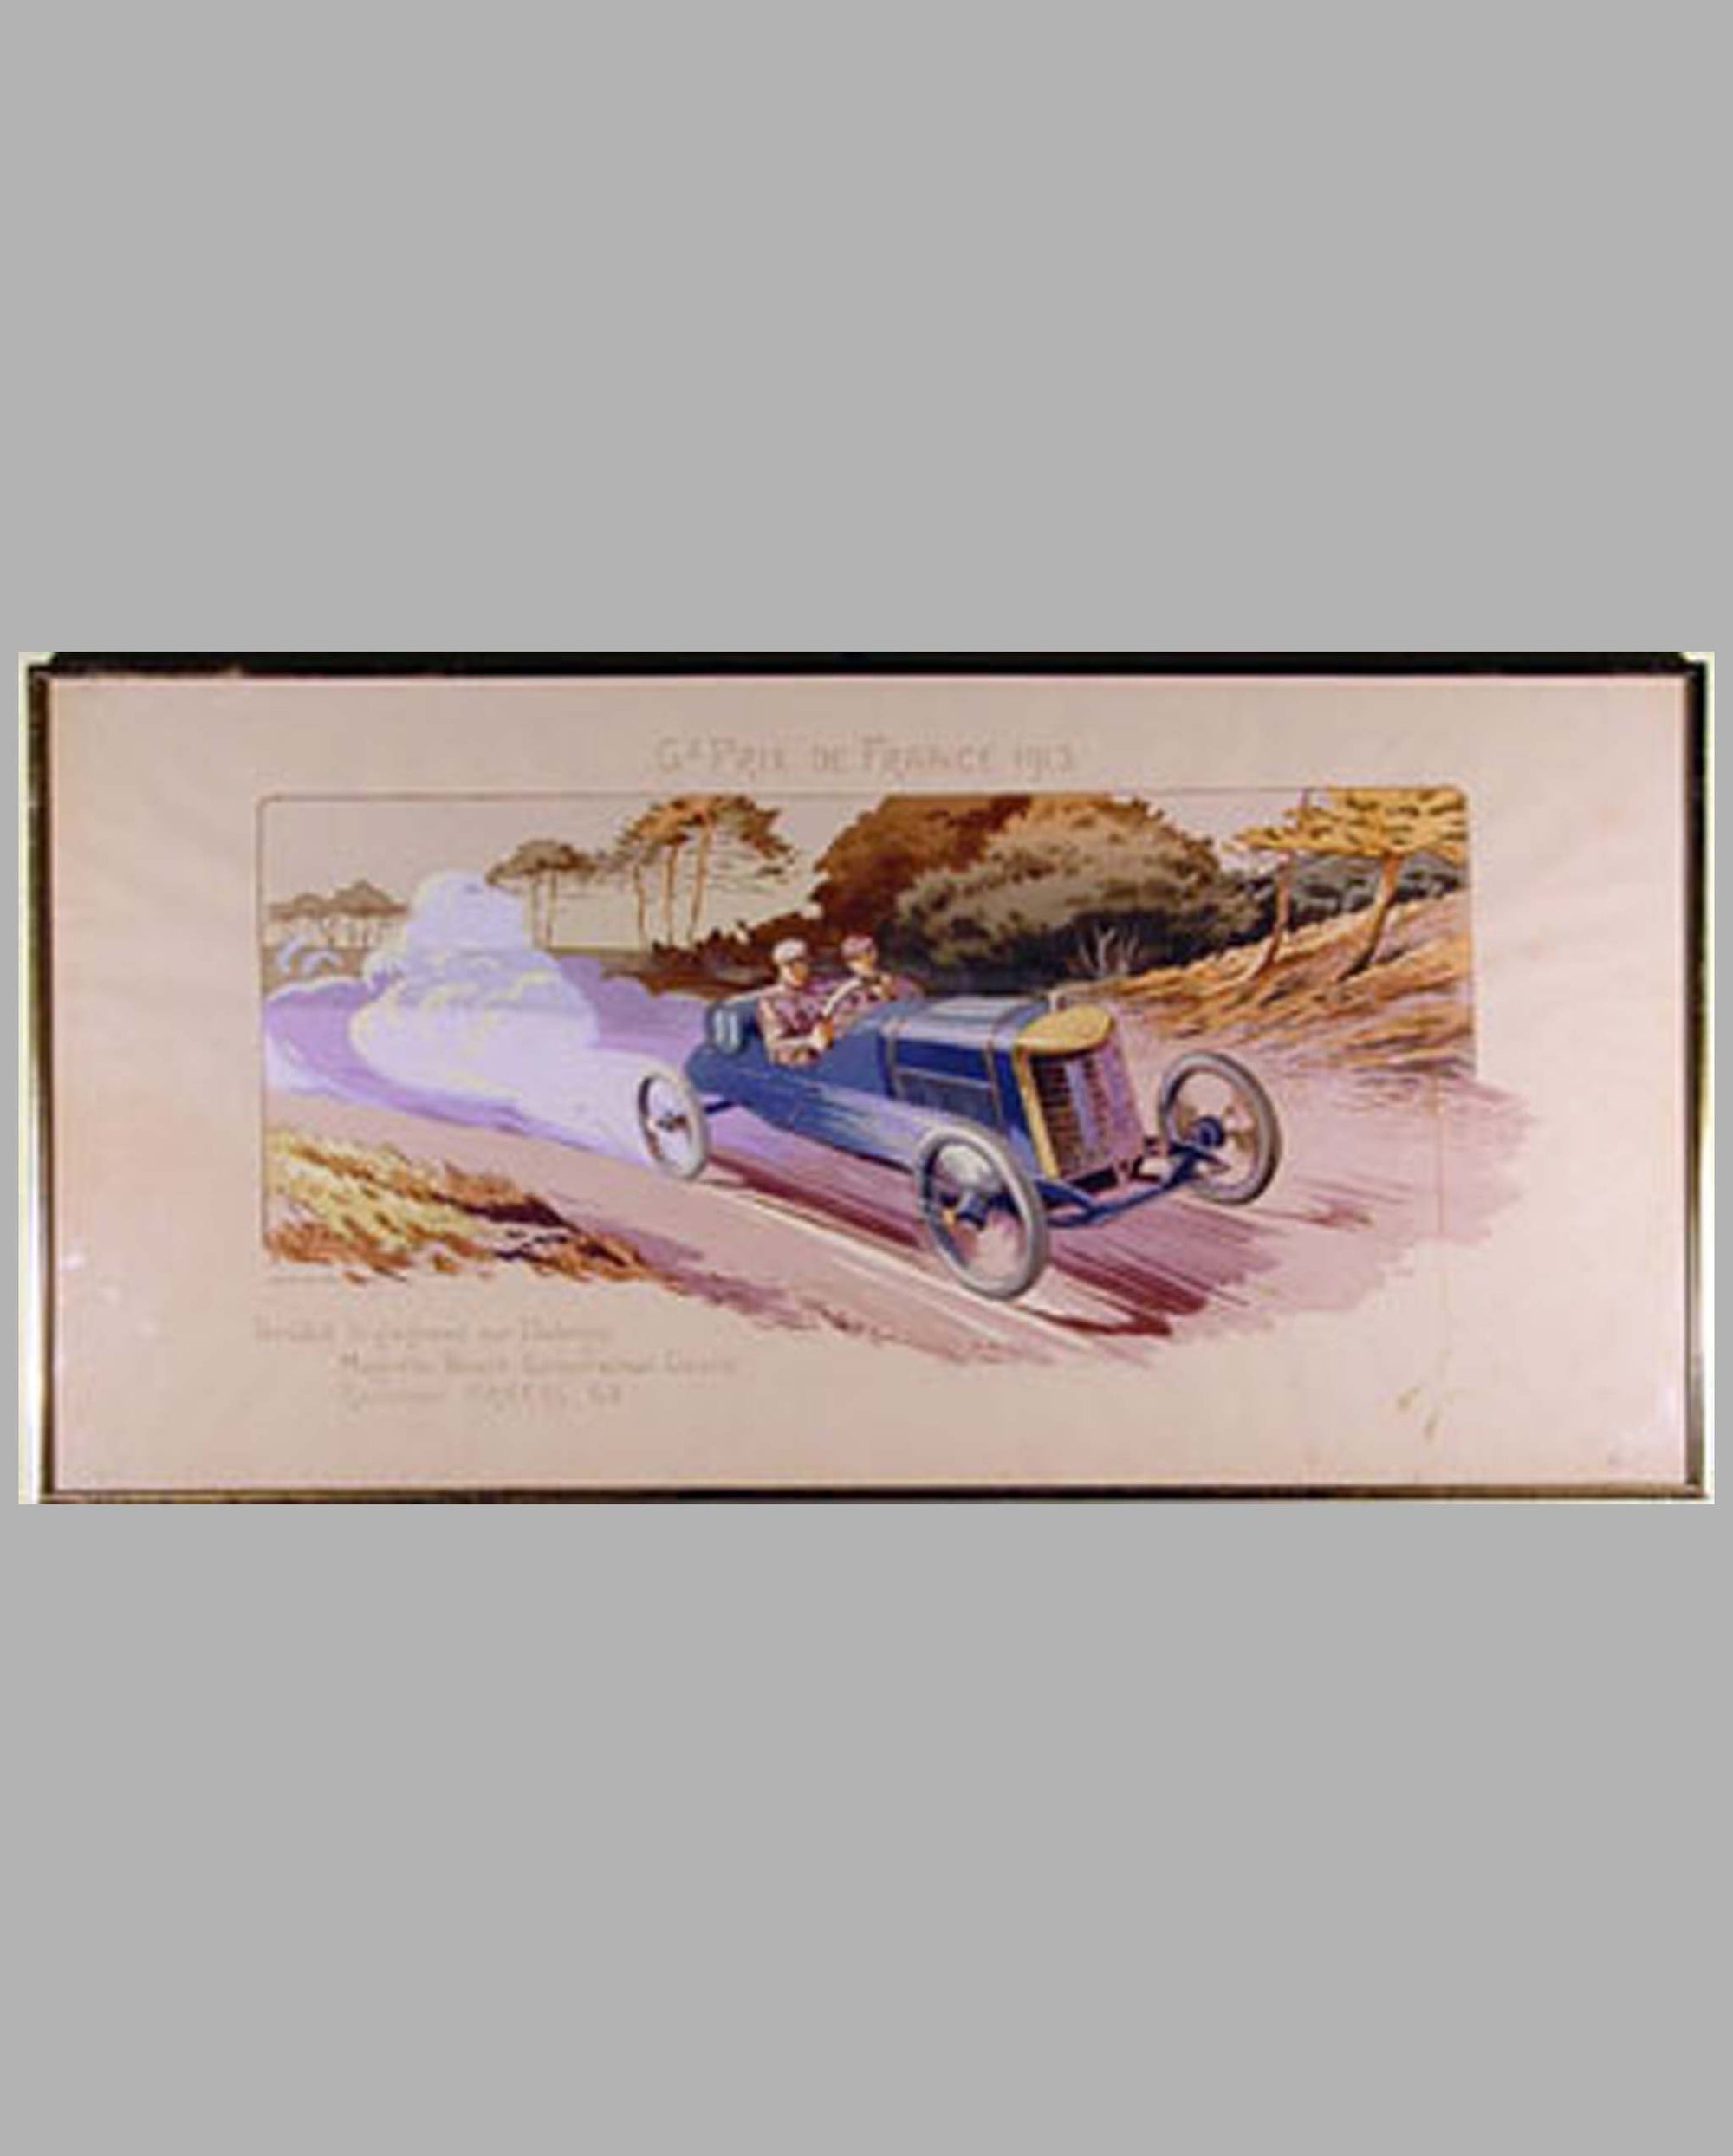 Grand Prix De France 1913 hand colored lithograph by Ernest Montaut